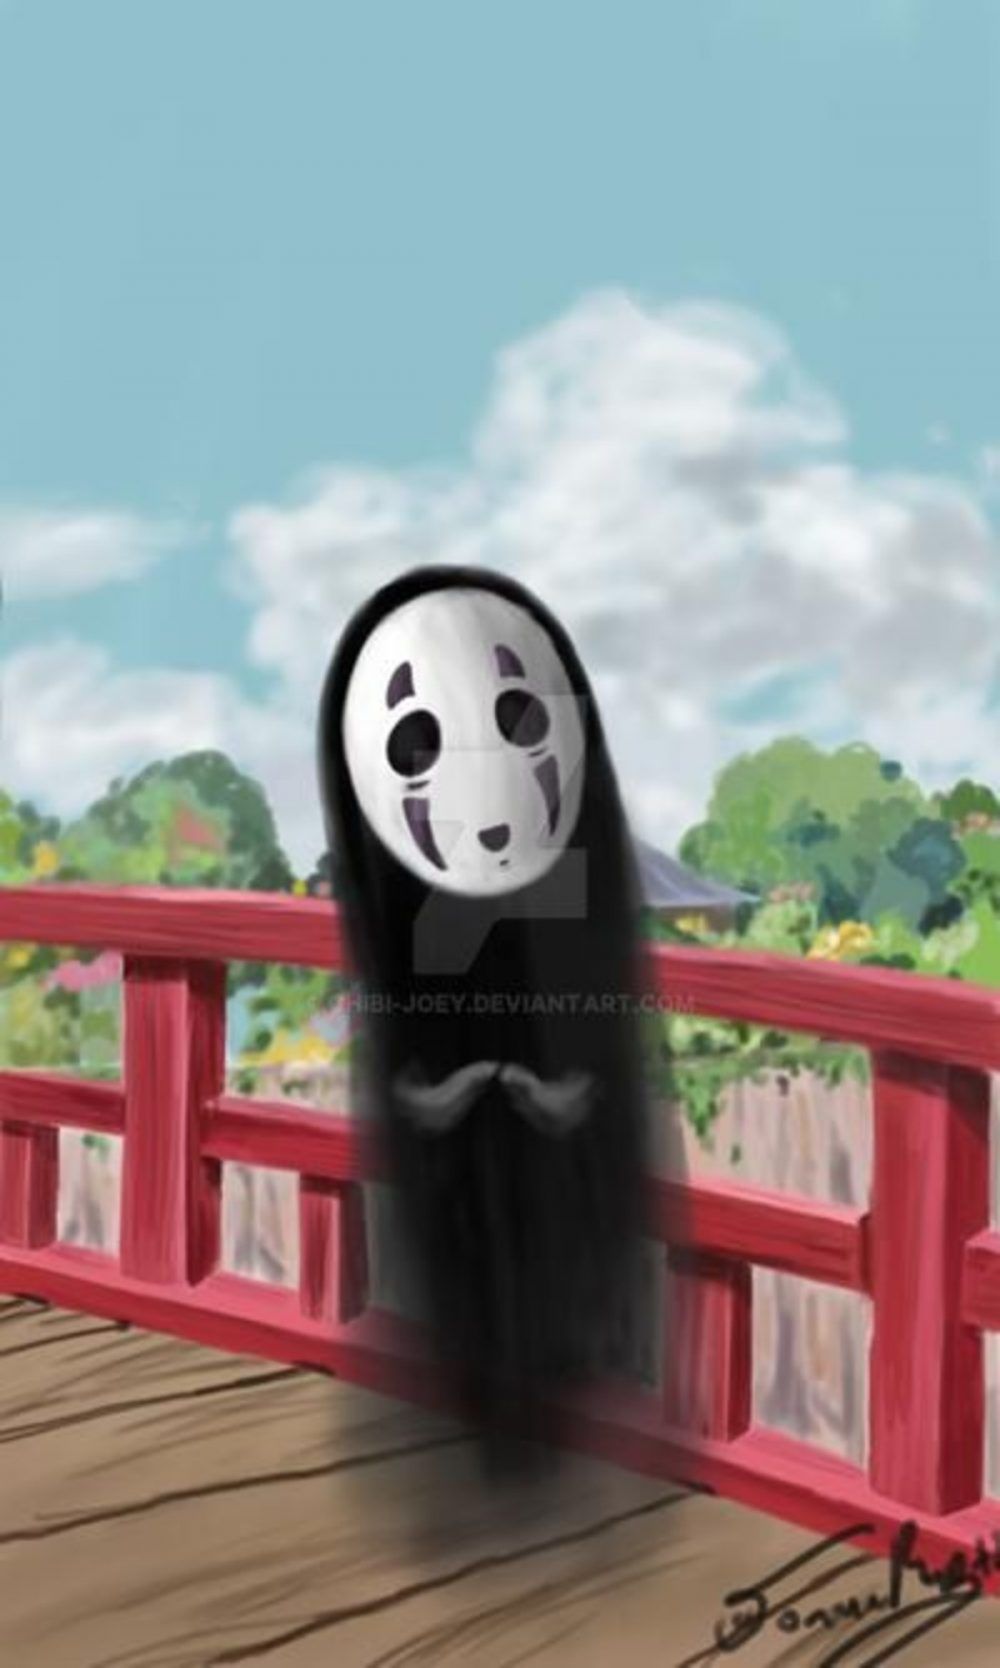 Cute No Face Studio Ghibli fanart by chibi_joey